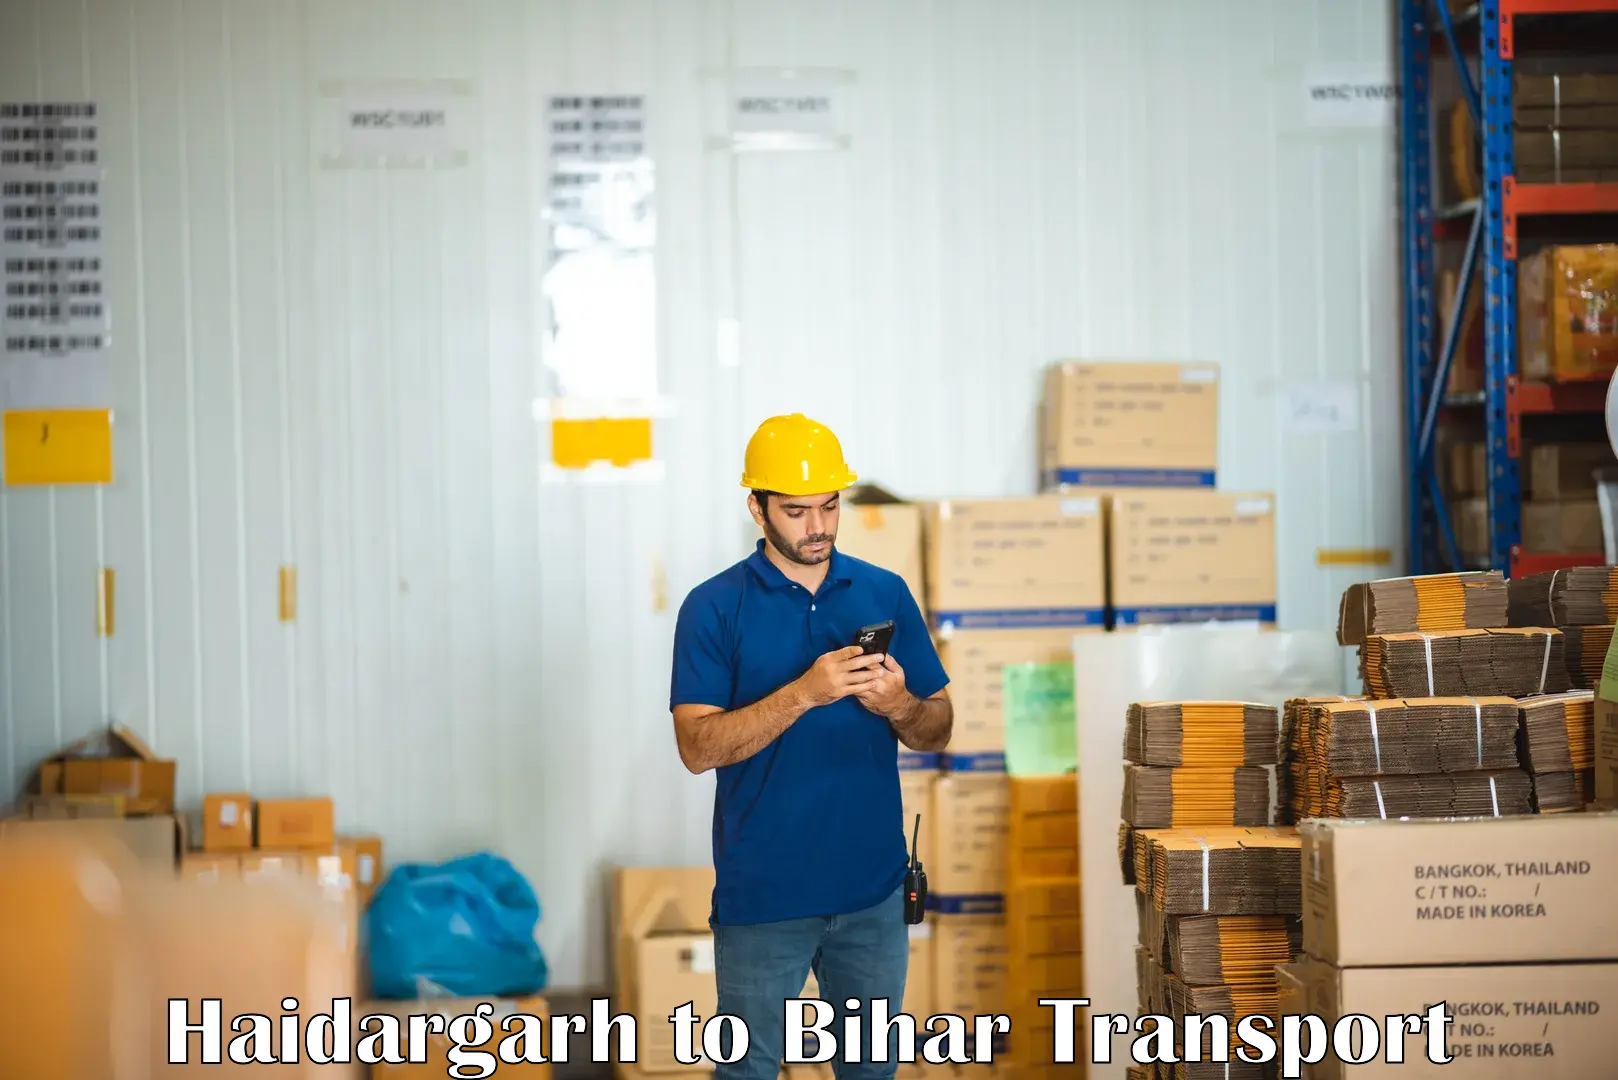 Shipping partner Haidargarh to Bankipore